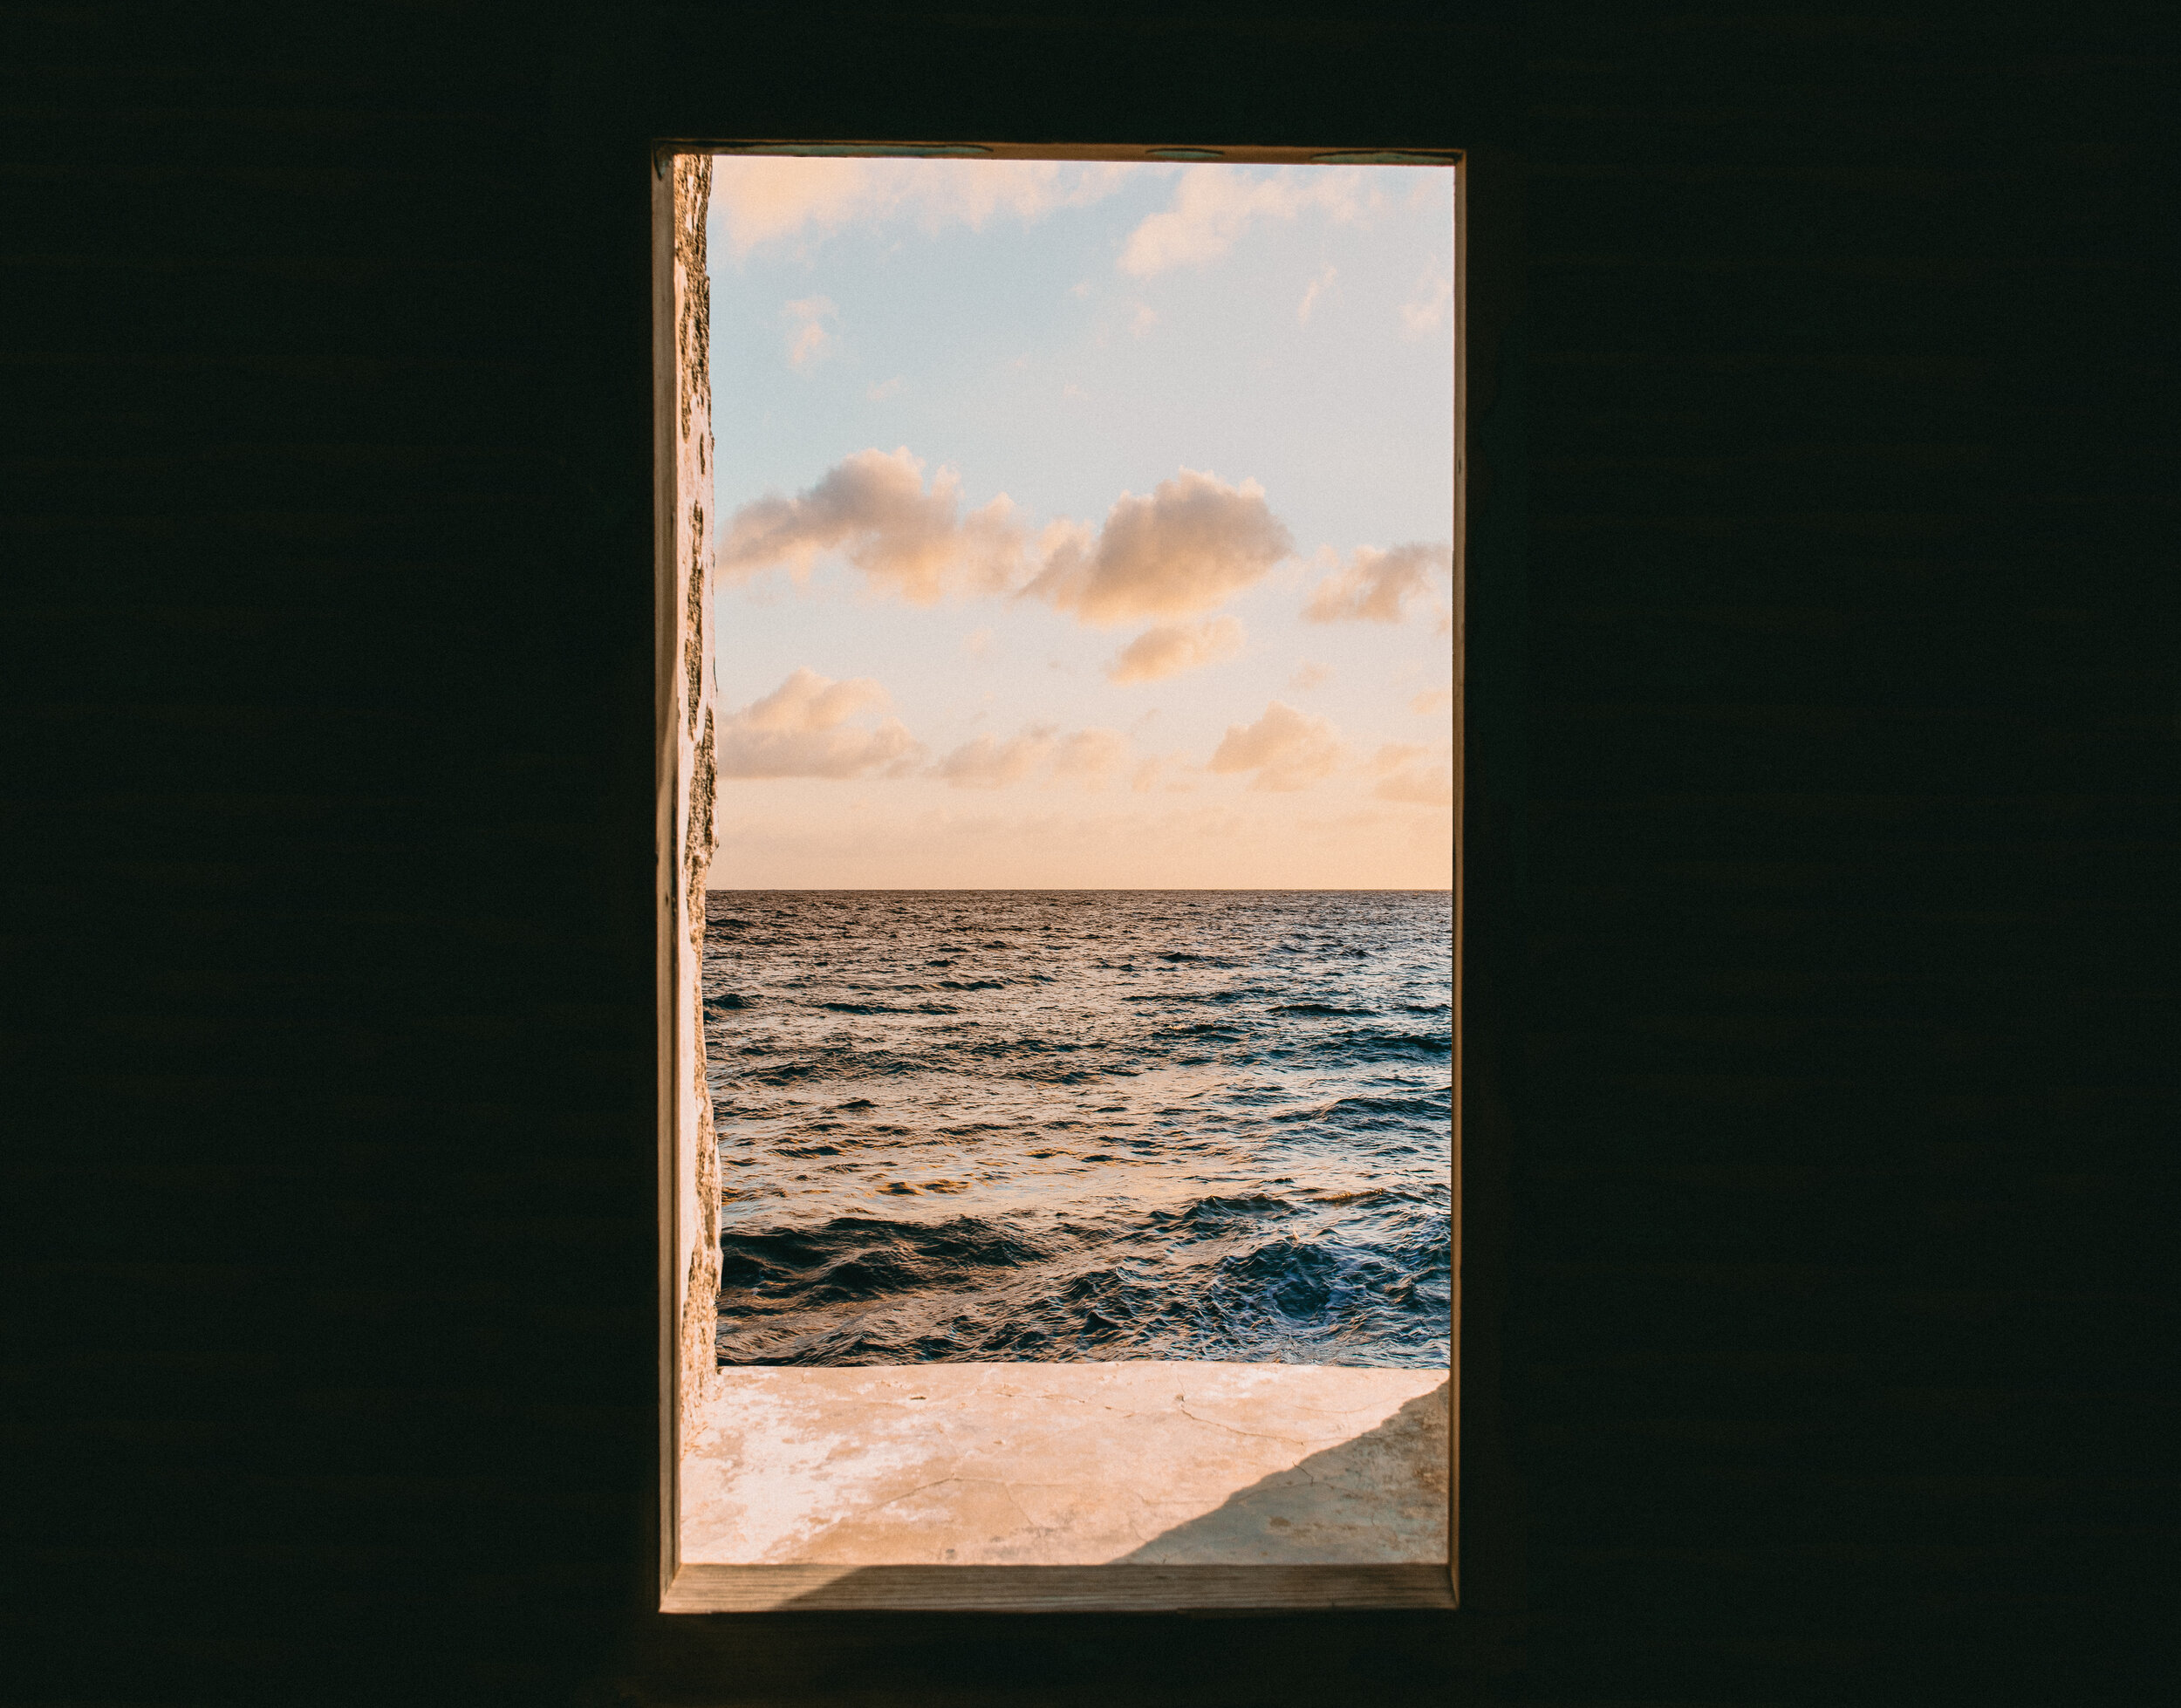 window-view-of-sea-during-golden-hour-2733955.jpg